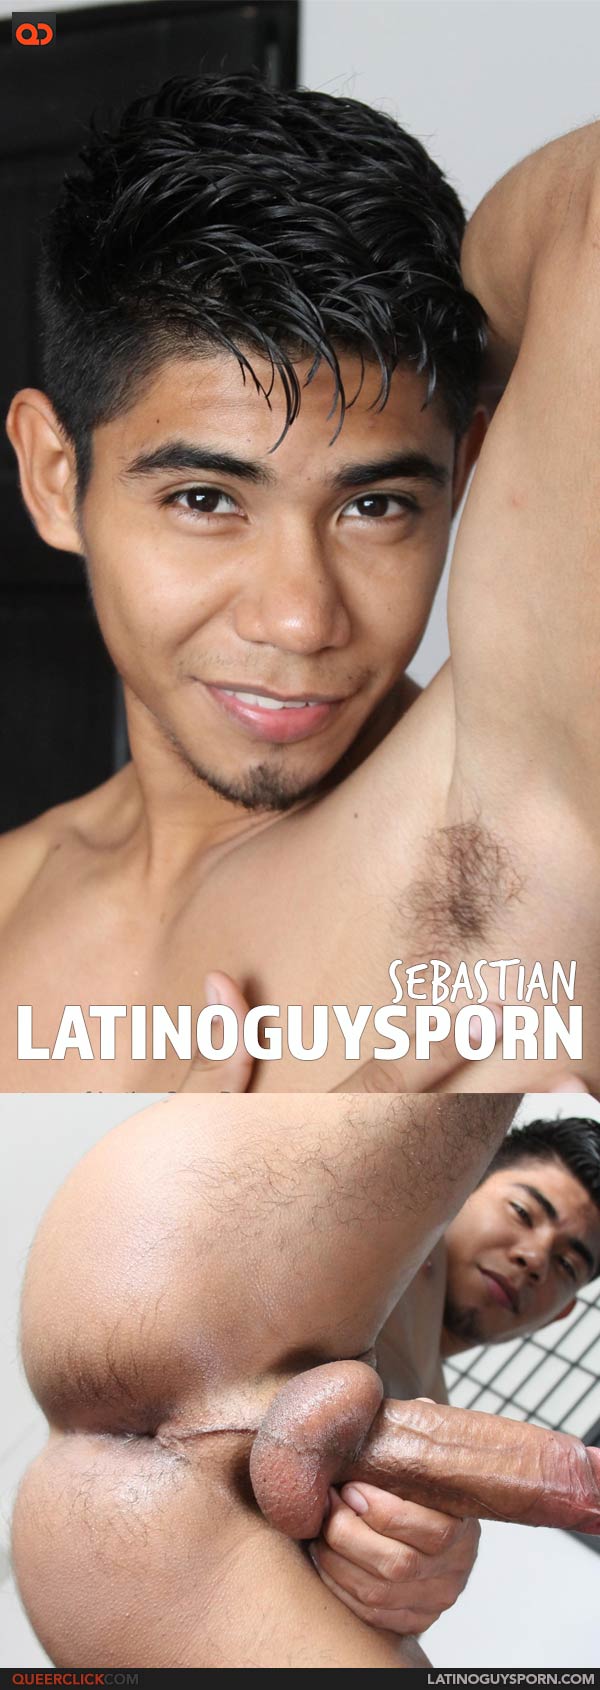 New Site: Latino Guys Porn - Sebastian